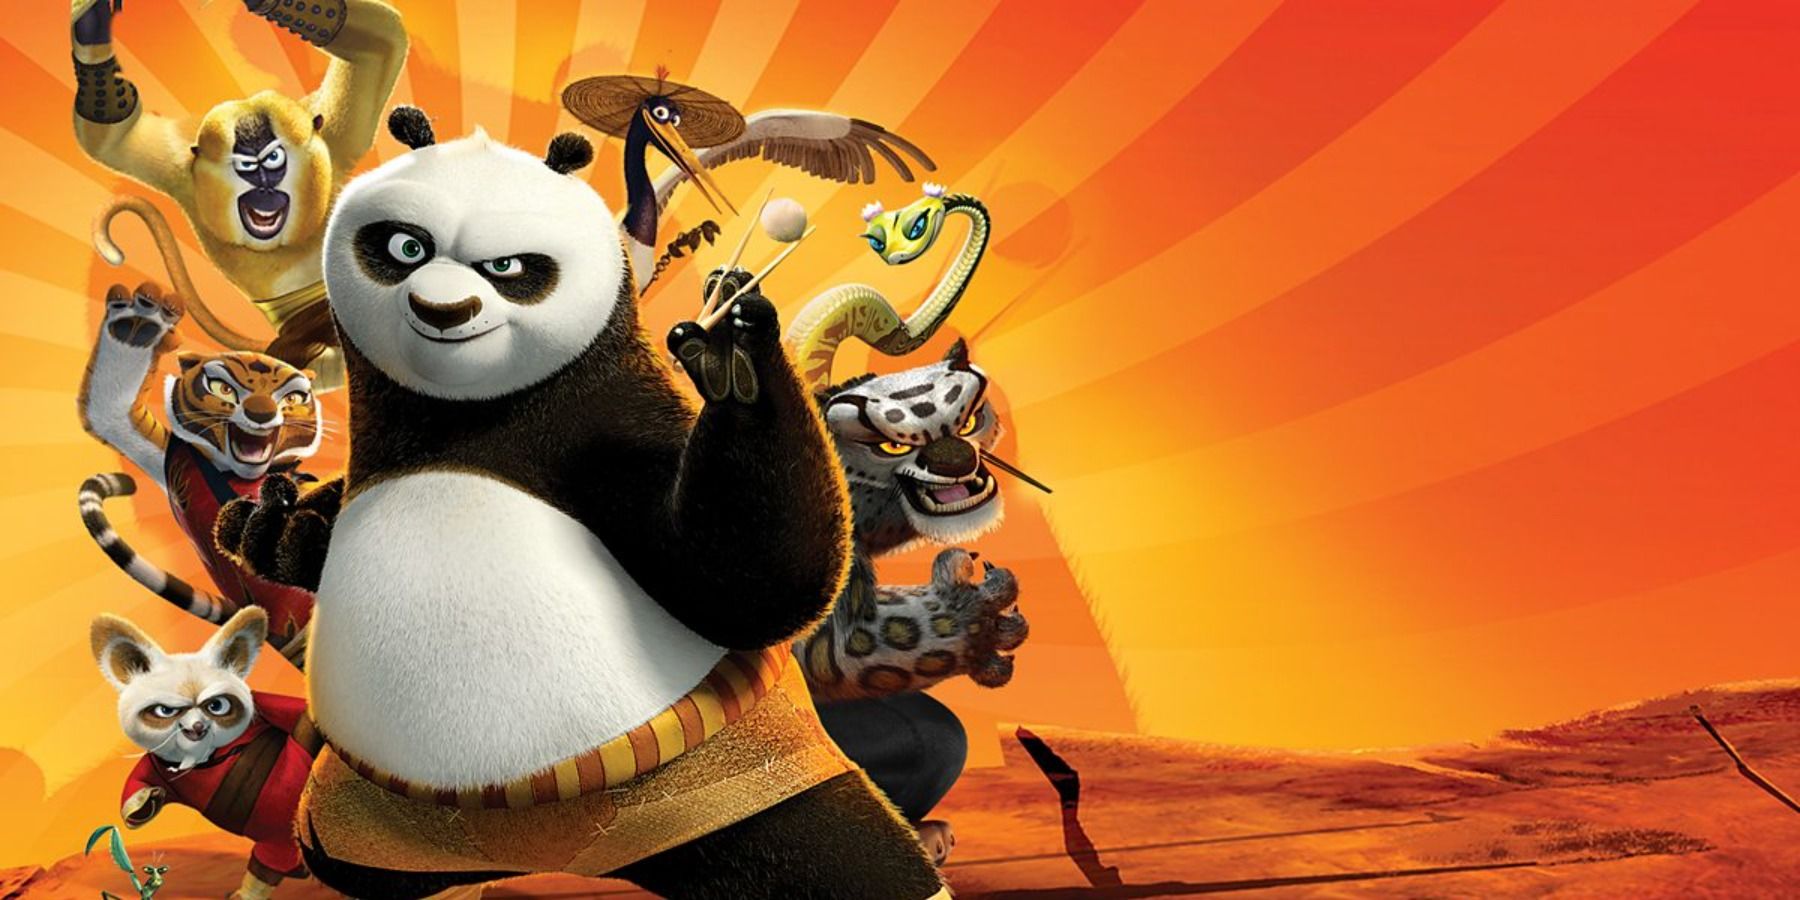 King Fu Panda characters